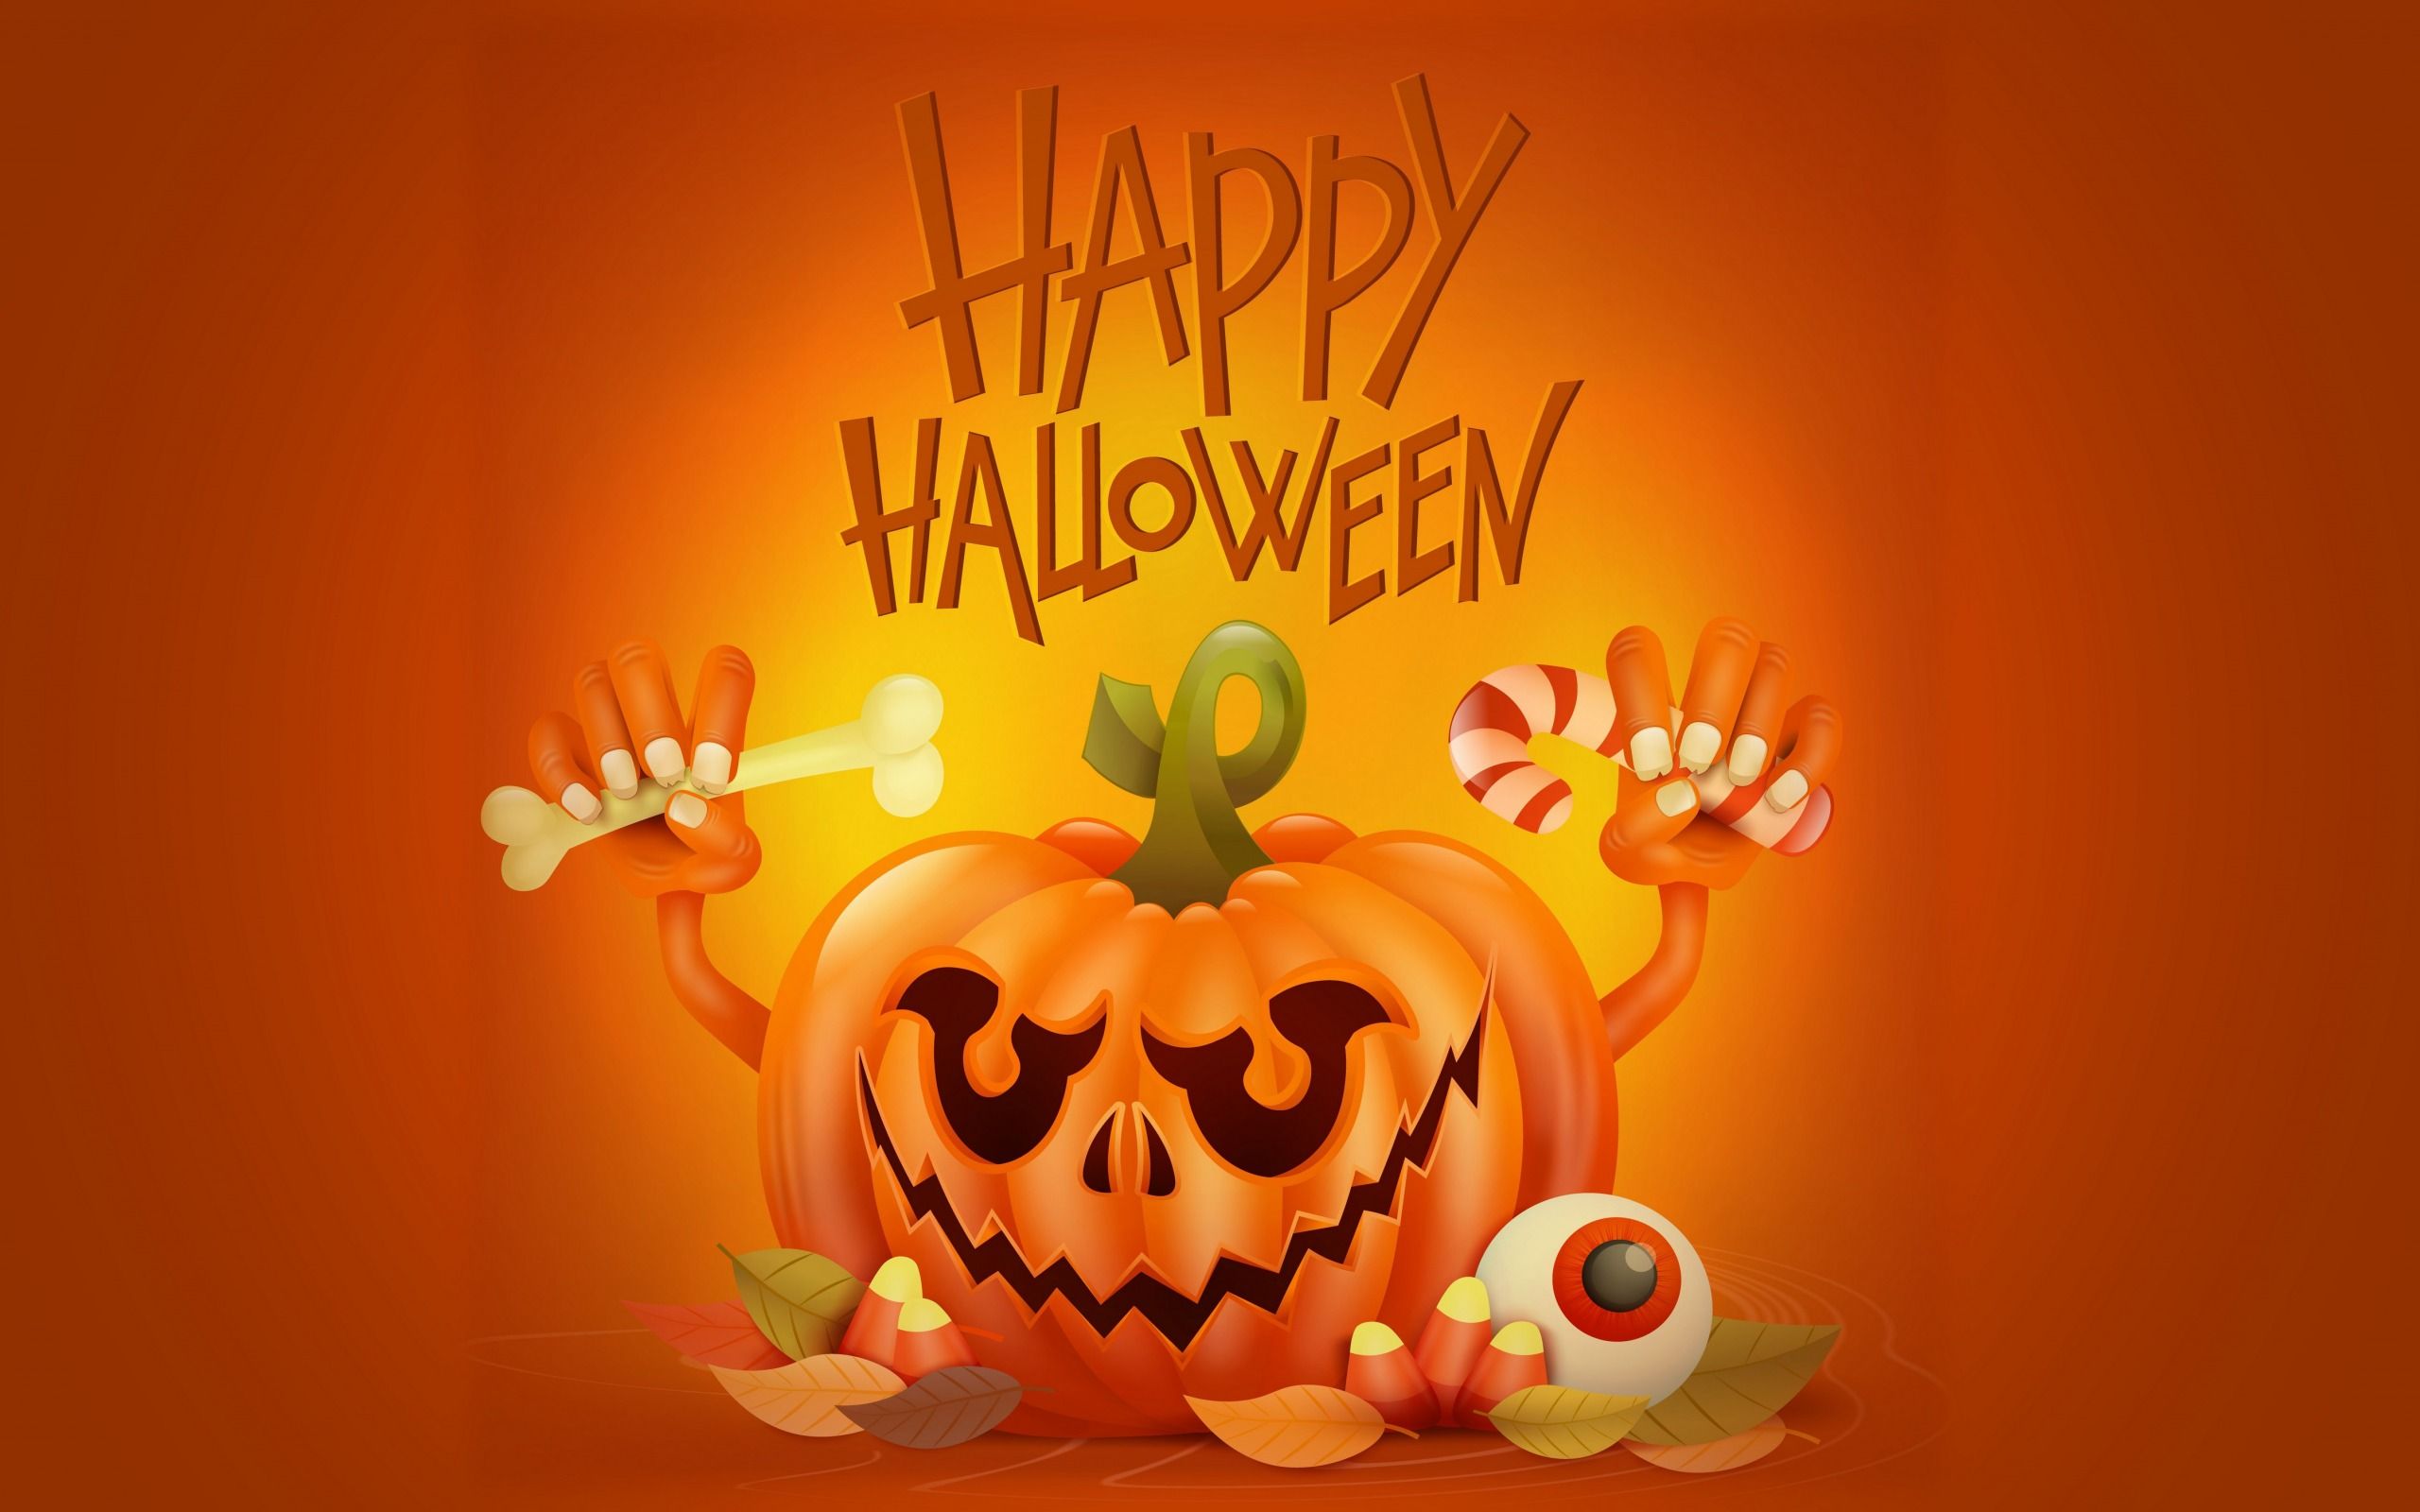 Download wallpaper Halloween, pumpkin, autumn holiday, October 3D orange pumpkin, poster for desktop with resolution 2560x1600. High Quality HD picture wallpaper